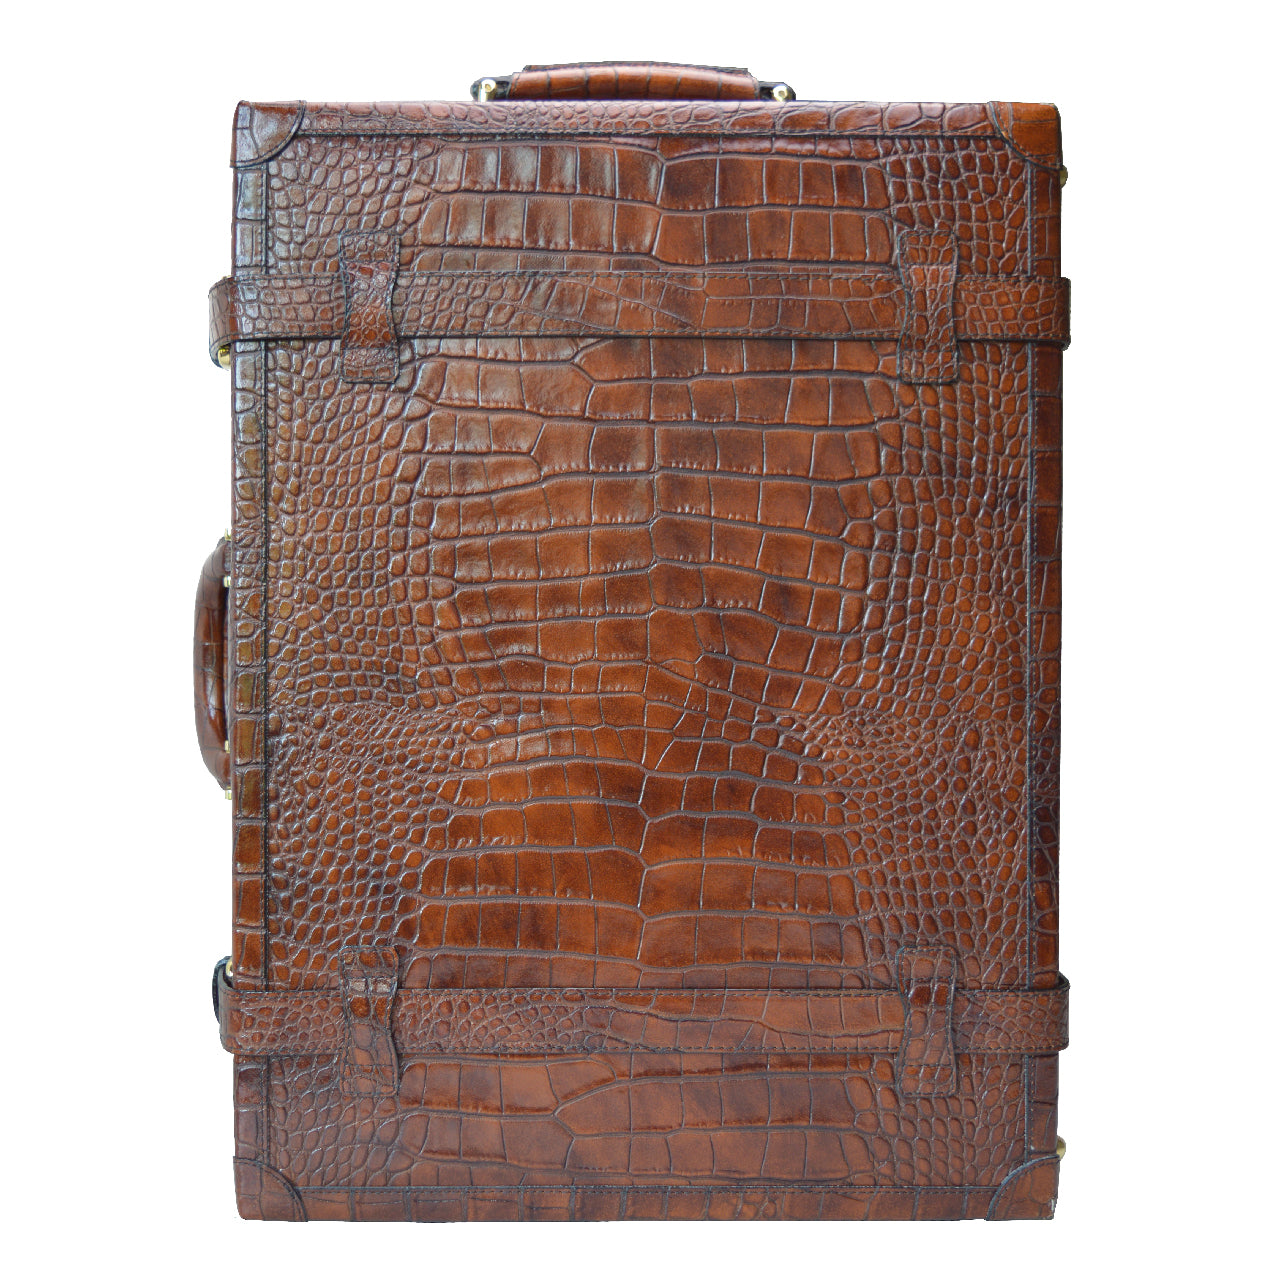 Pratesi Diligenza Travel Bag in genuine Italian leather